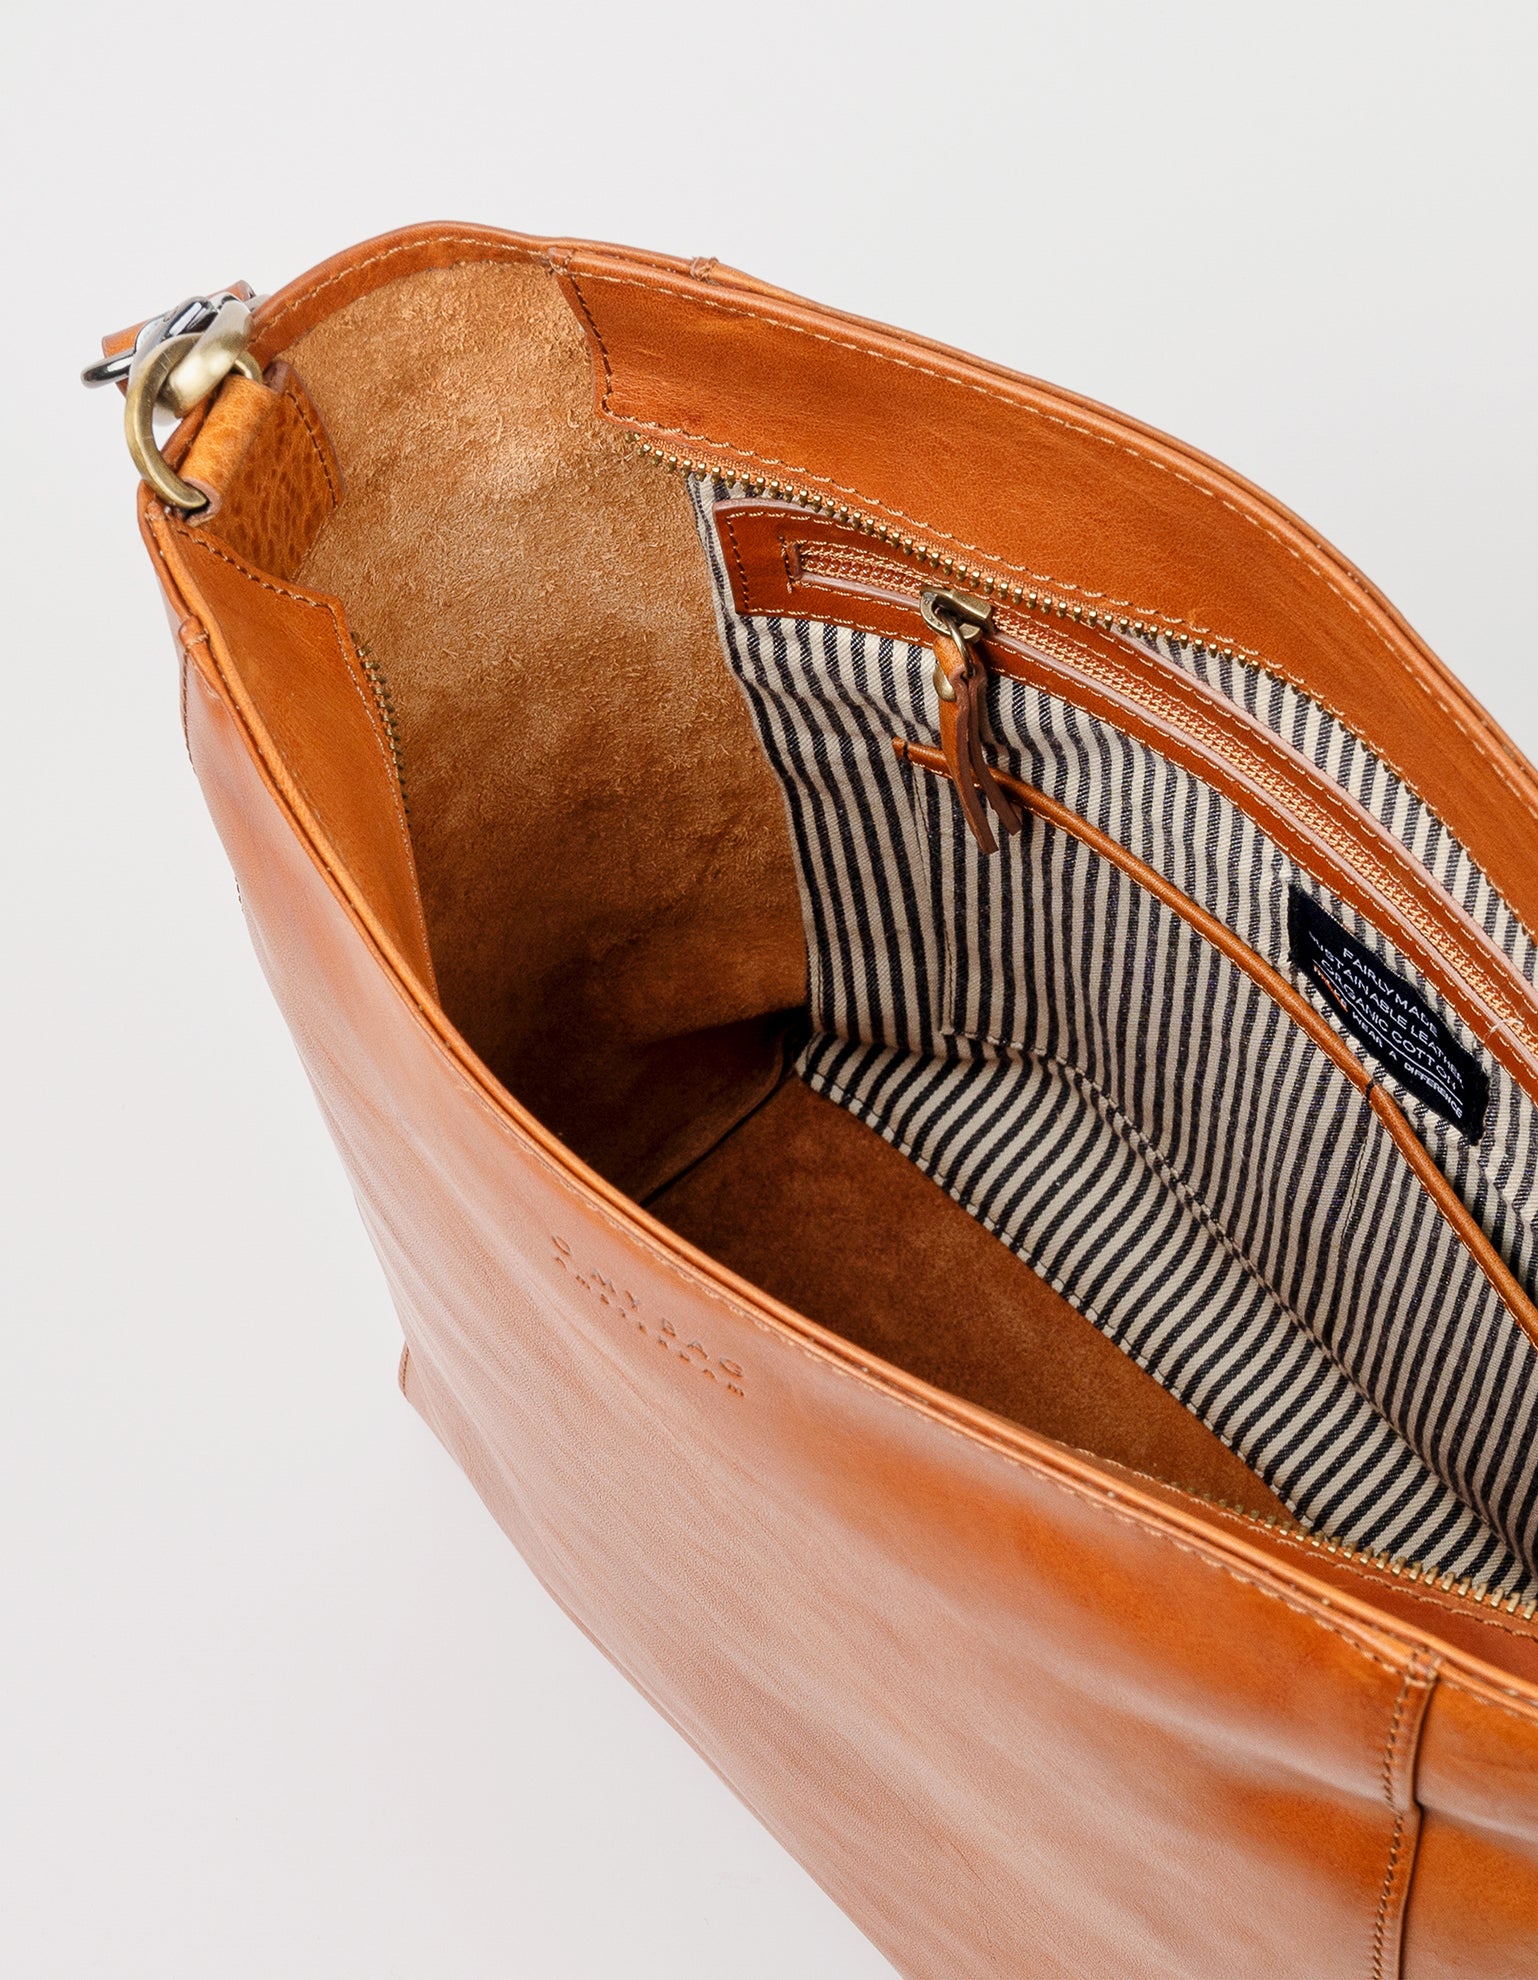 Sofia - Cognac Stromboli Leather - inside product image